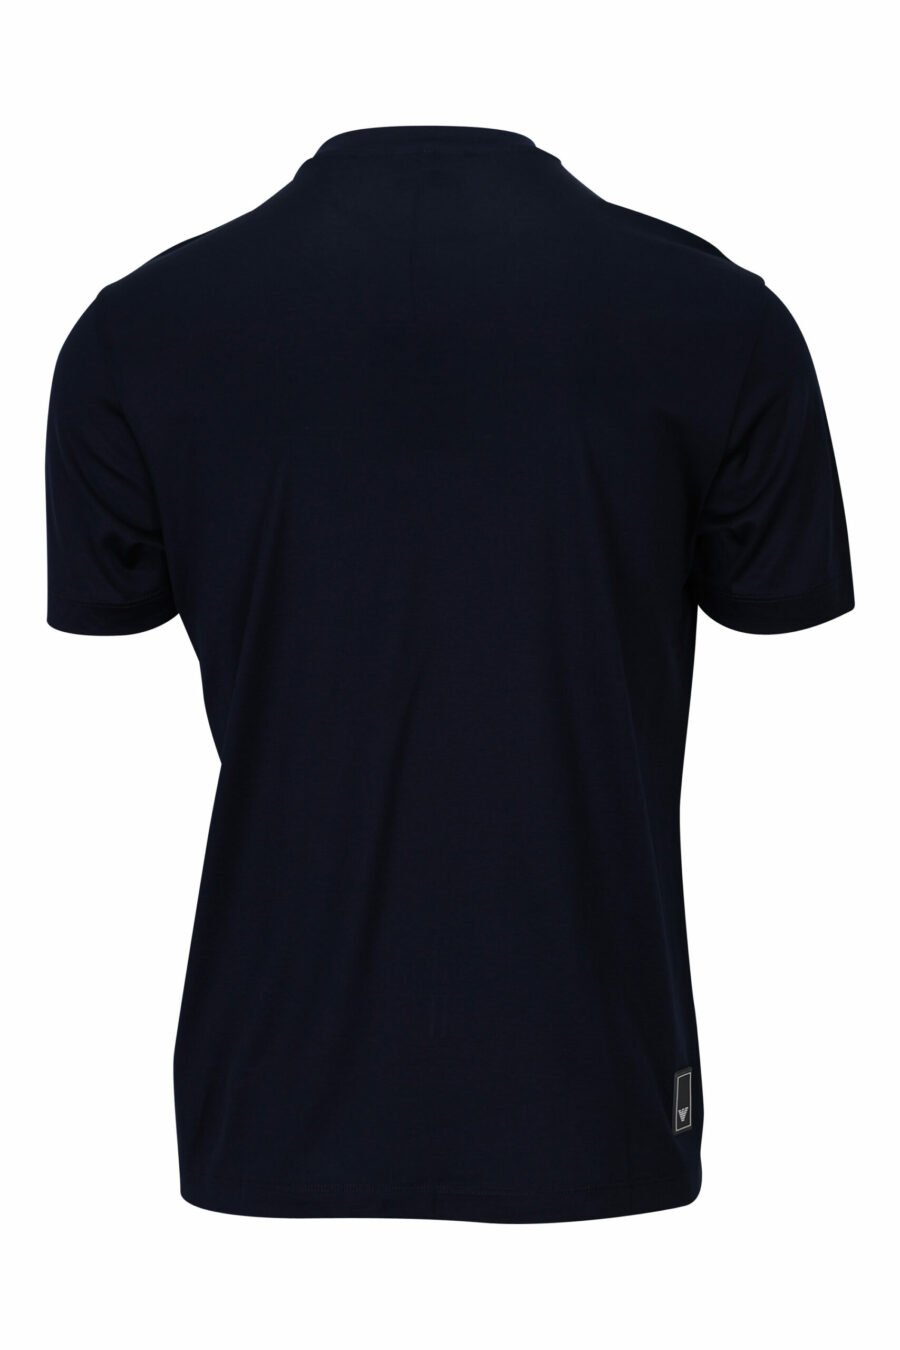 Camiseta azul marino con minilogo águila - 8057767732455 1 scaled